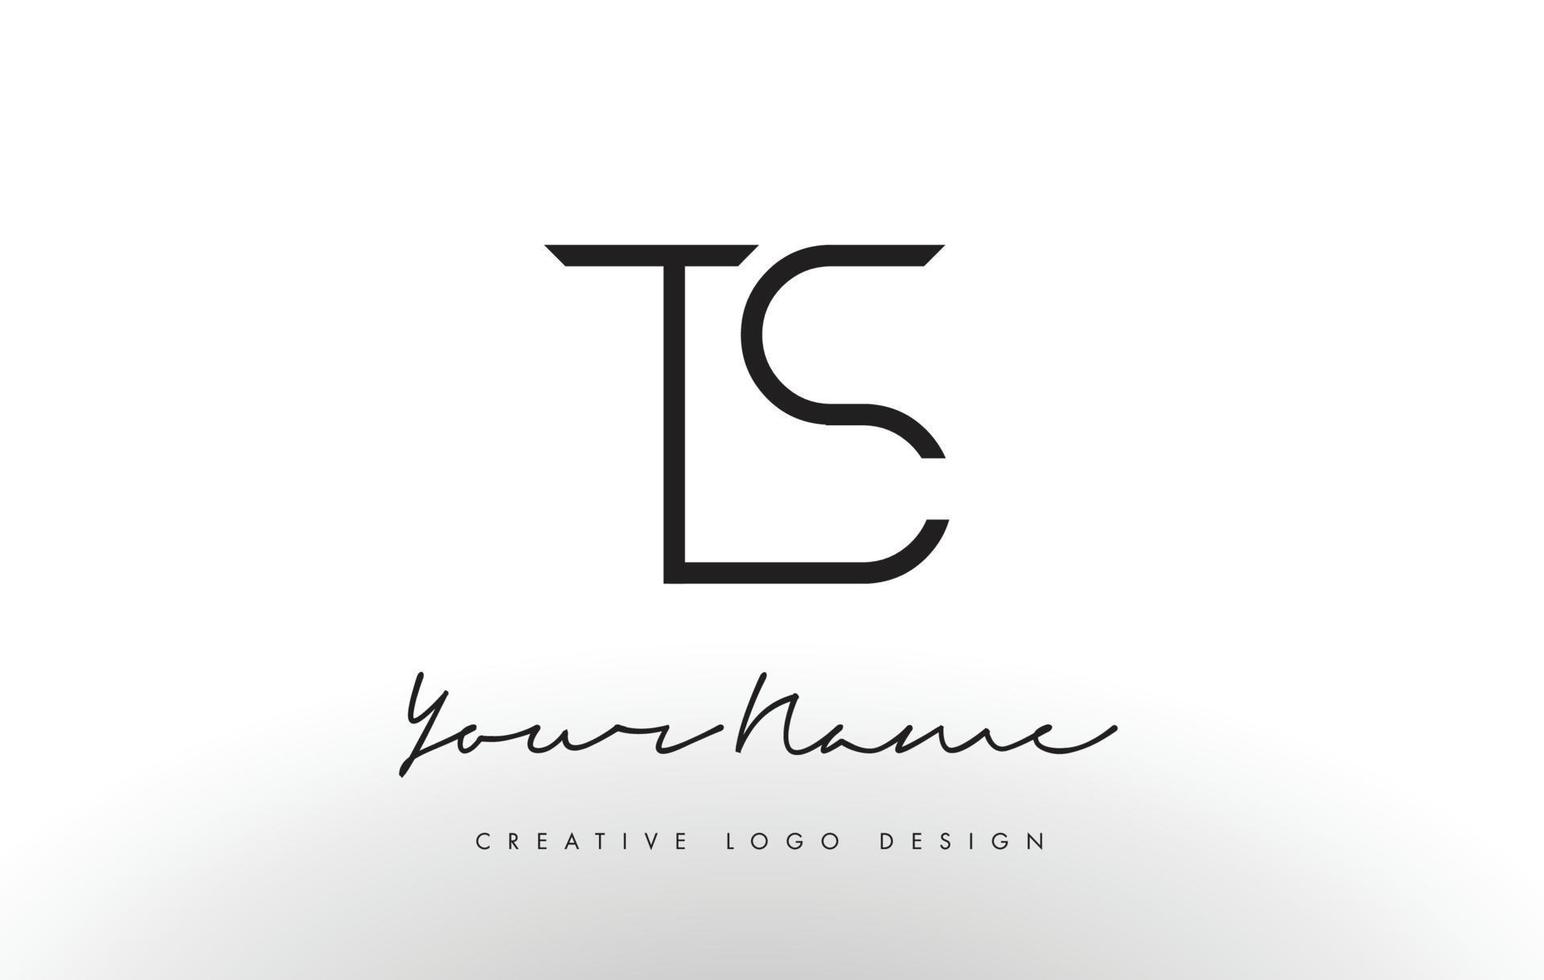 Diseño de logotipo de letras ts delgado. concepto creativo simple letra negra. vector